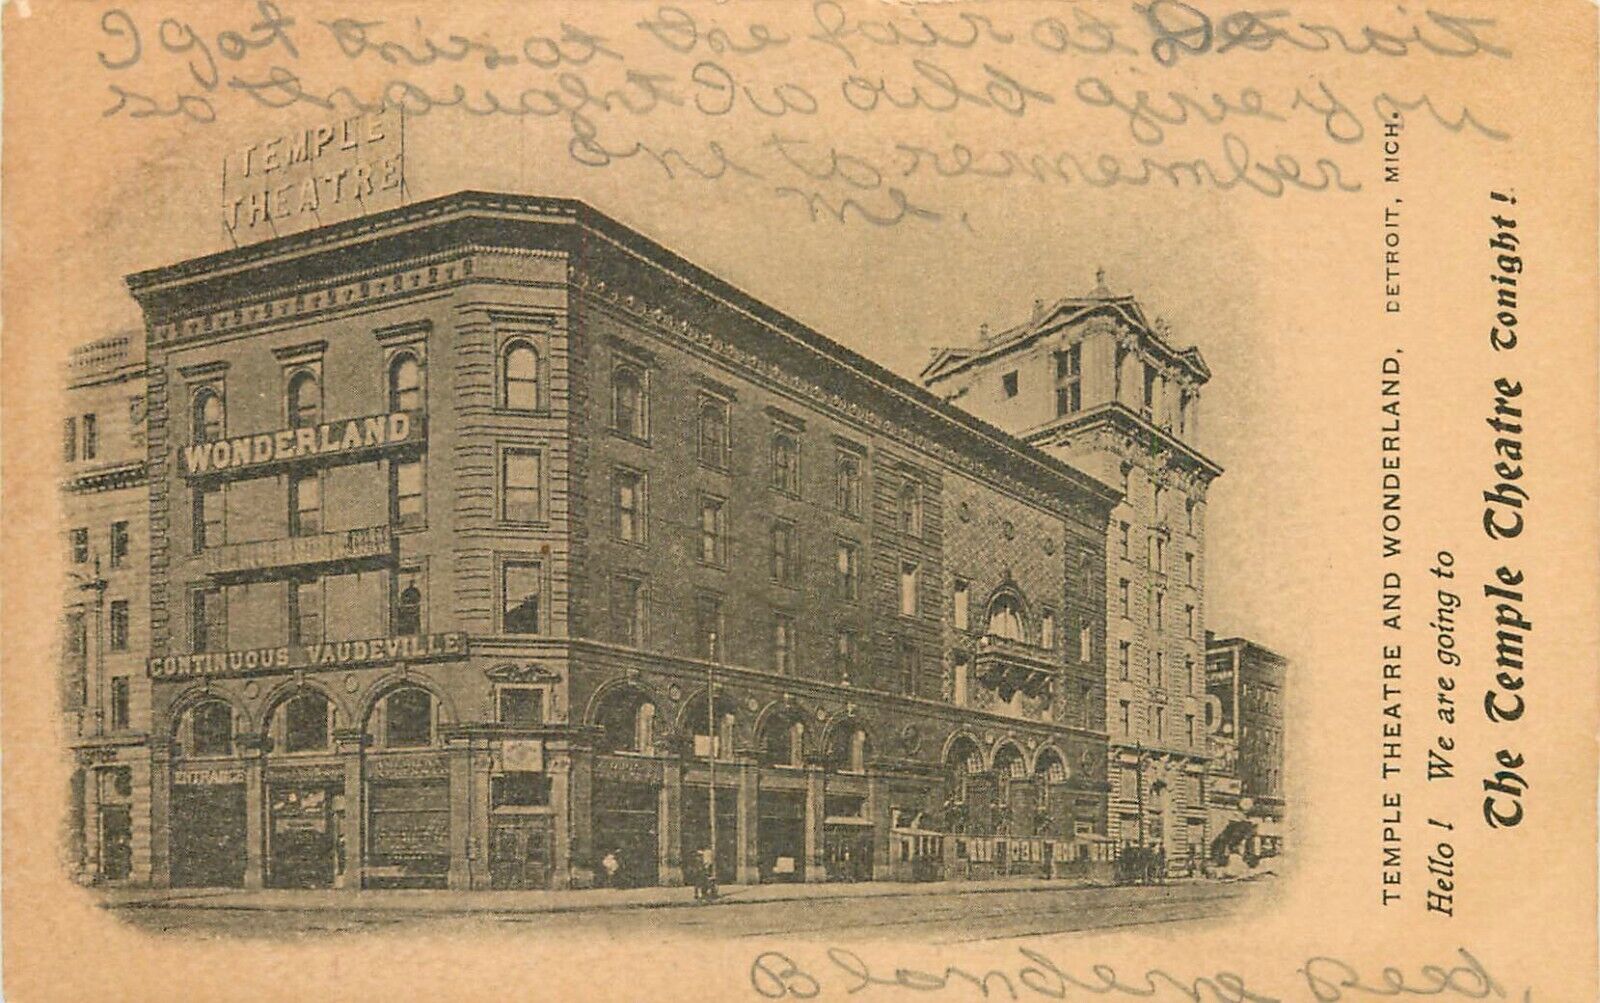 c1905 Elks Temple and Wonderland Vaudeville Theatre, Detroit, Michigan Postcard